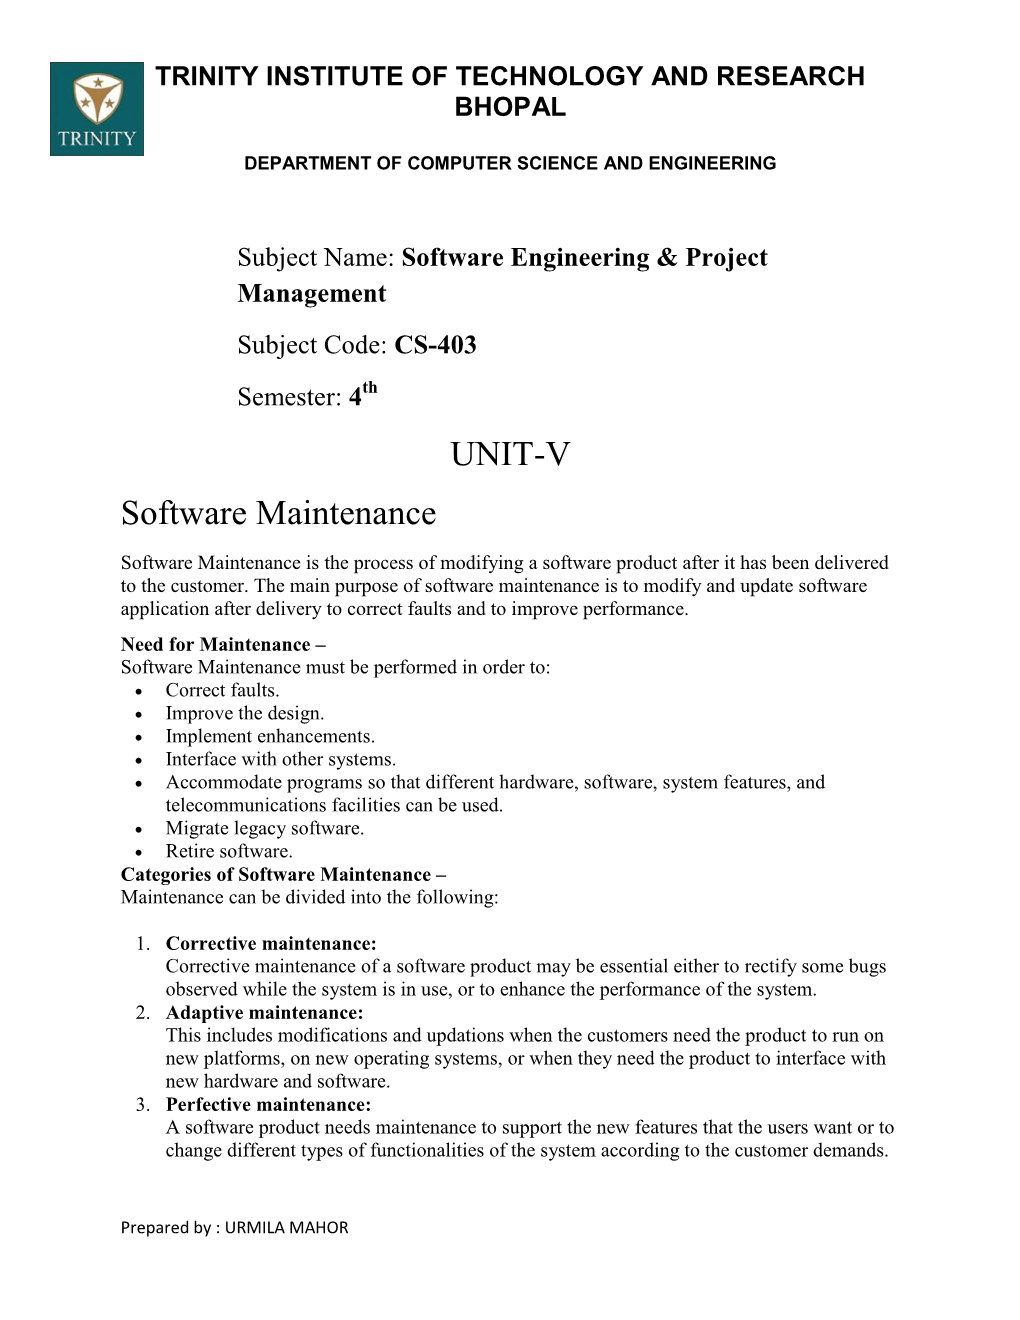 UNIT-V Software Maintenance